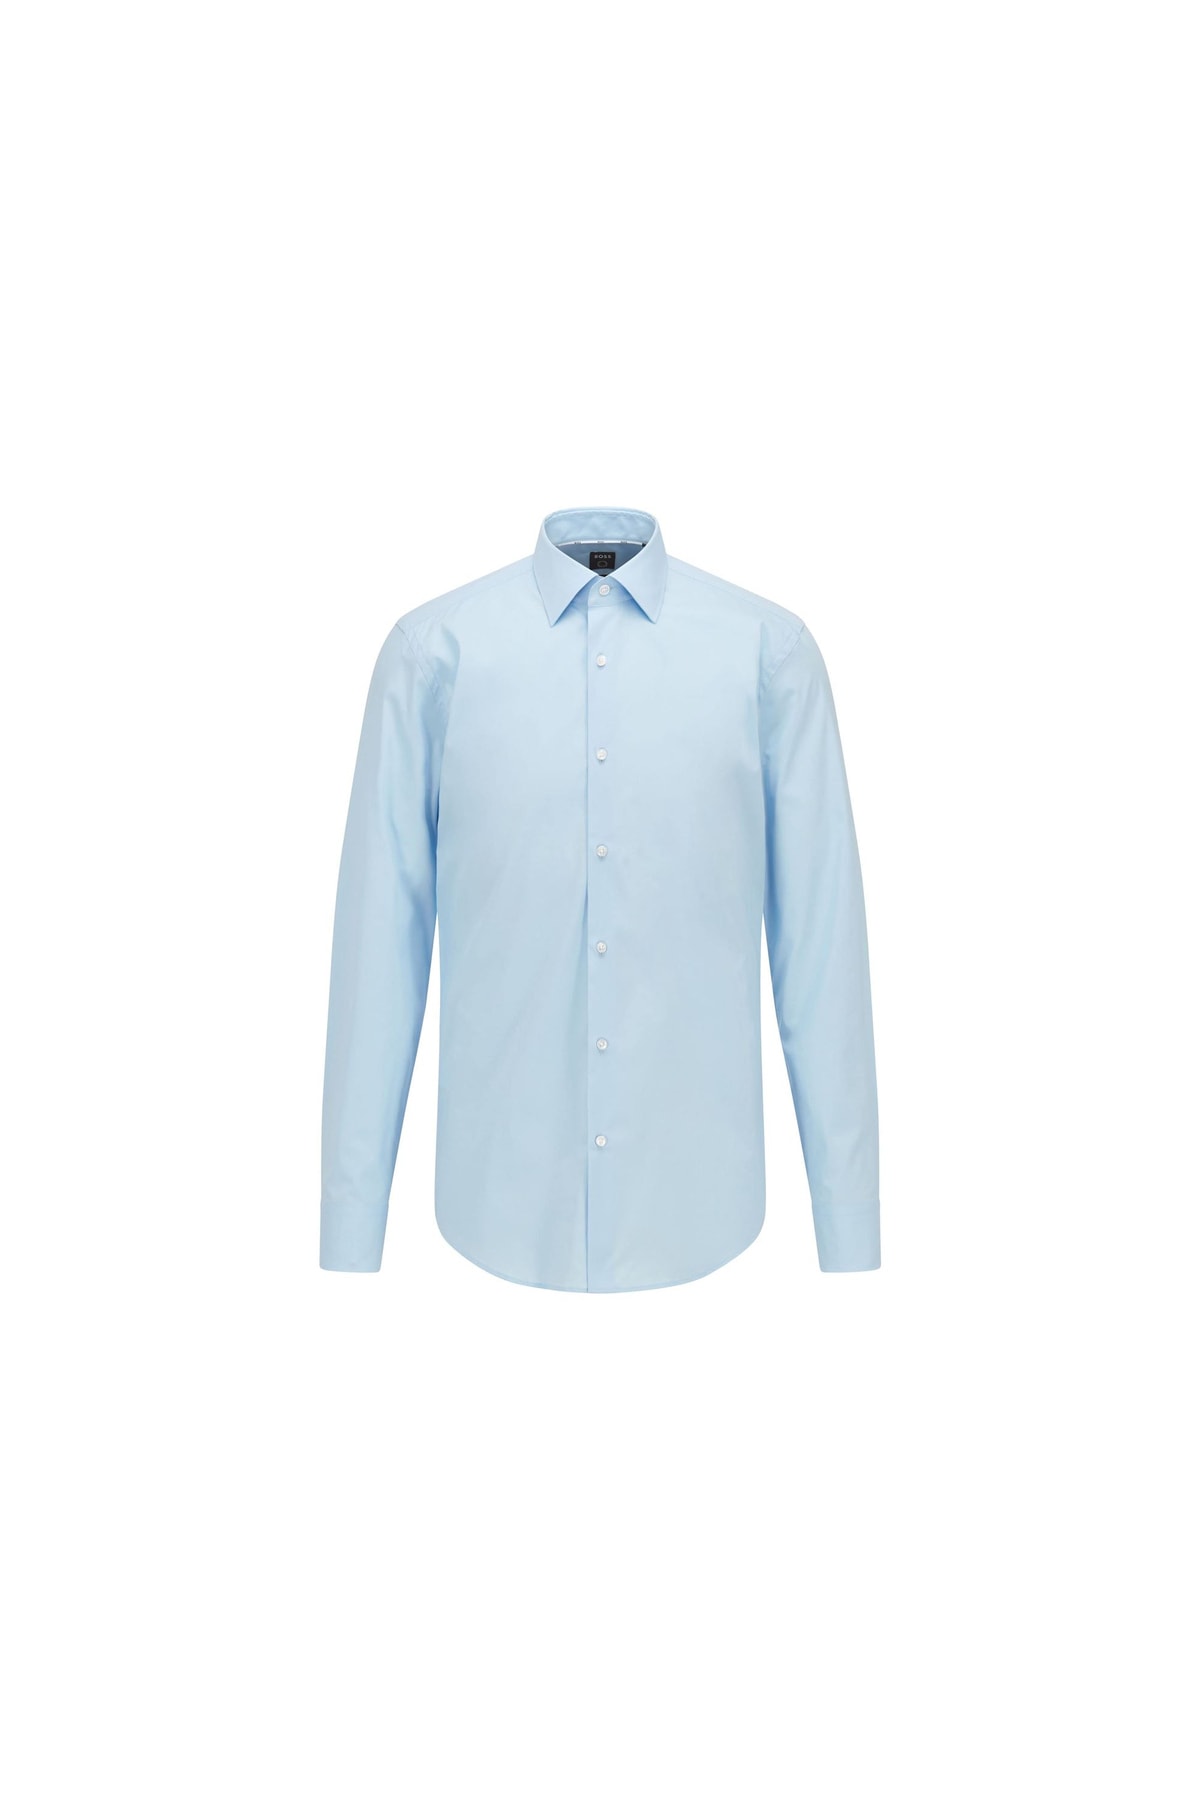 Hugo Boss Hemd Blau Regular Fit Fast ausverkauft